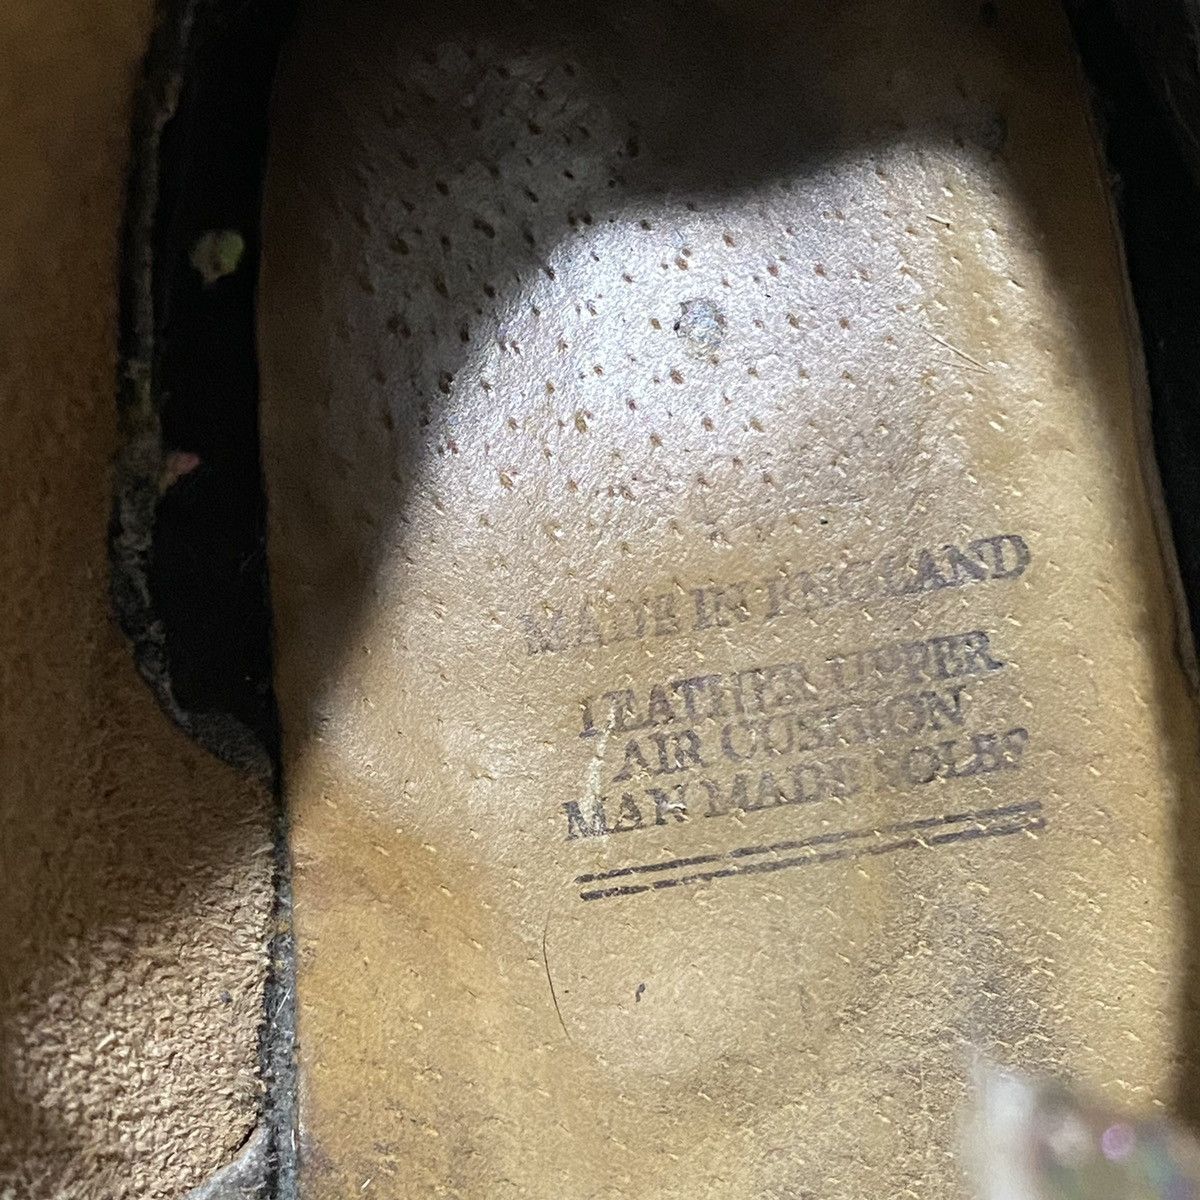 Vintage Dr. Martens Iridescent Metallic Scales England Boots RARE Size US 5 / EU 37 - 9 Thumbnail